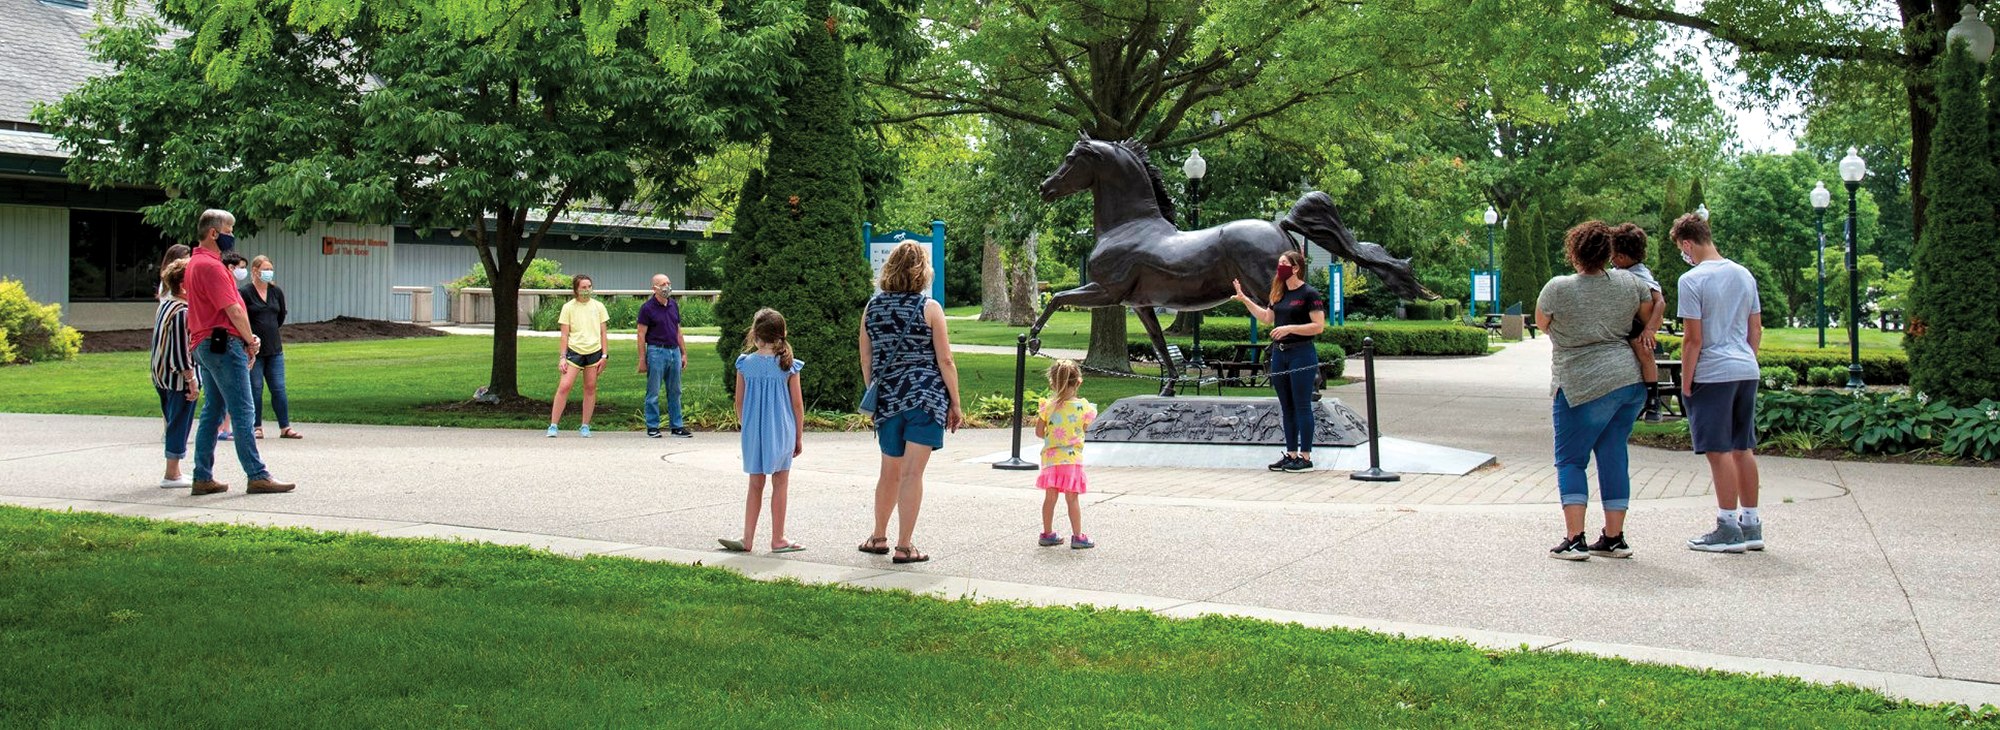 Morgan Statue at Kentucky Horse Park